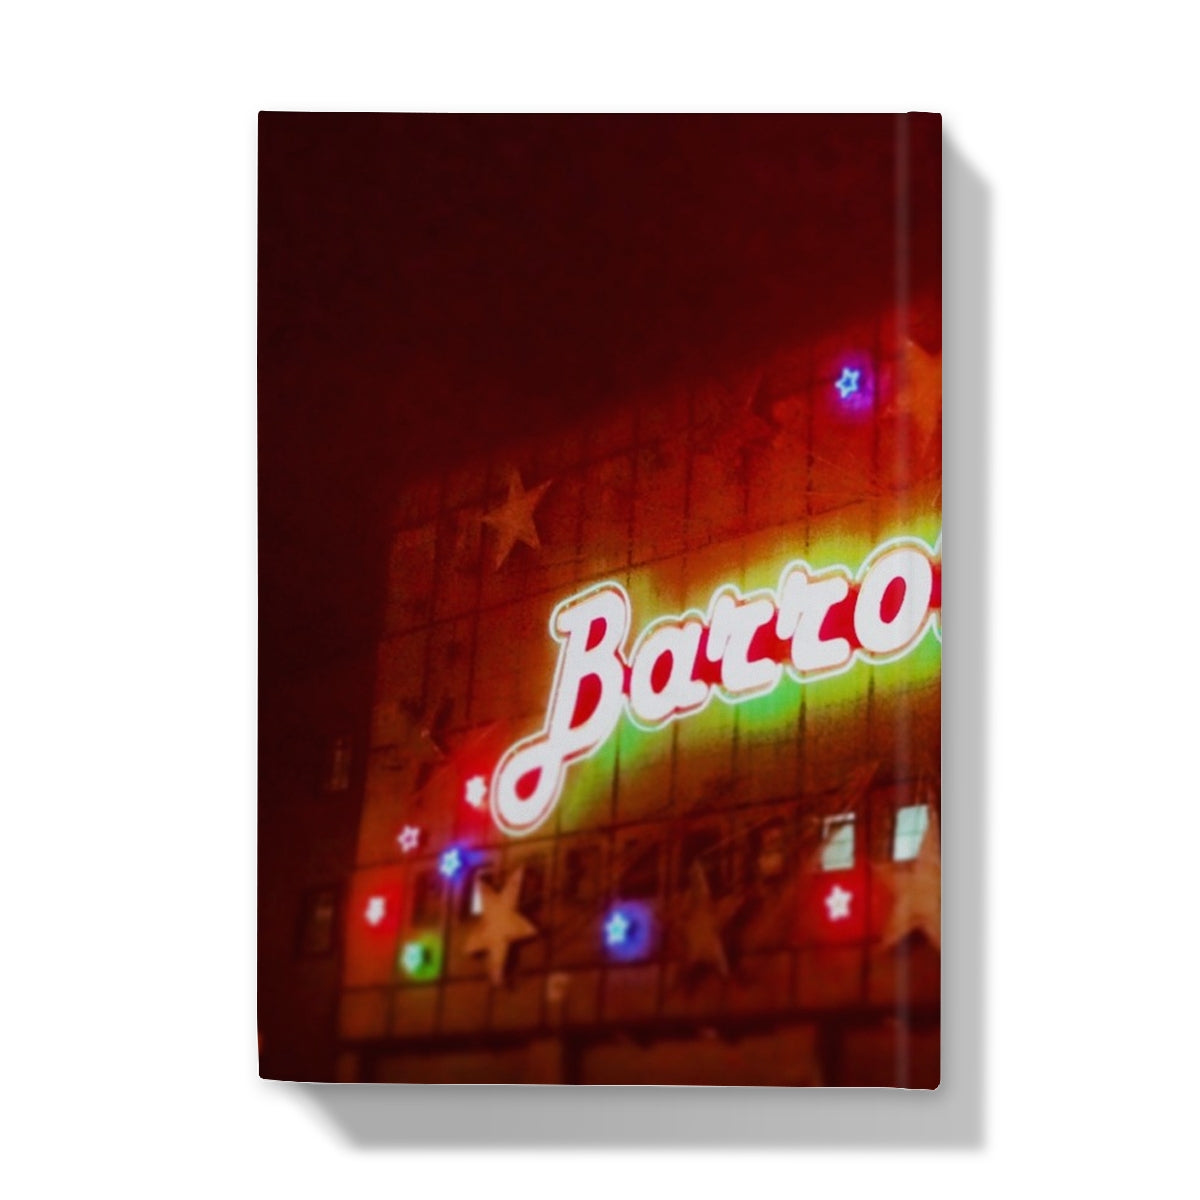 A Neon Glasgow Barrowlands Art Gifts Hardback Journal-Journals & Notebooks-Edinburgh & Glasgow Art Gallery-Paintings, Prints, Homeware, Art Gifts From Scotland By Scottish Artist Kevin Hunter